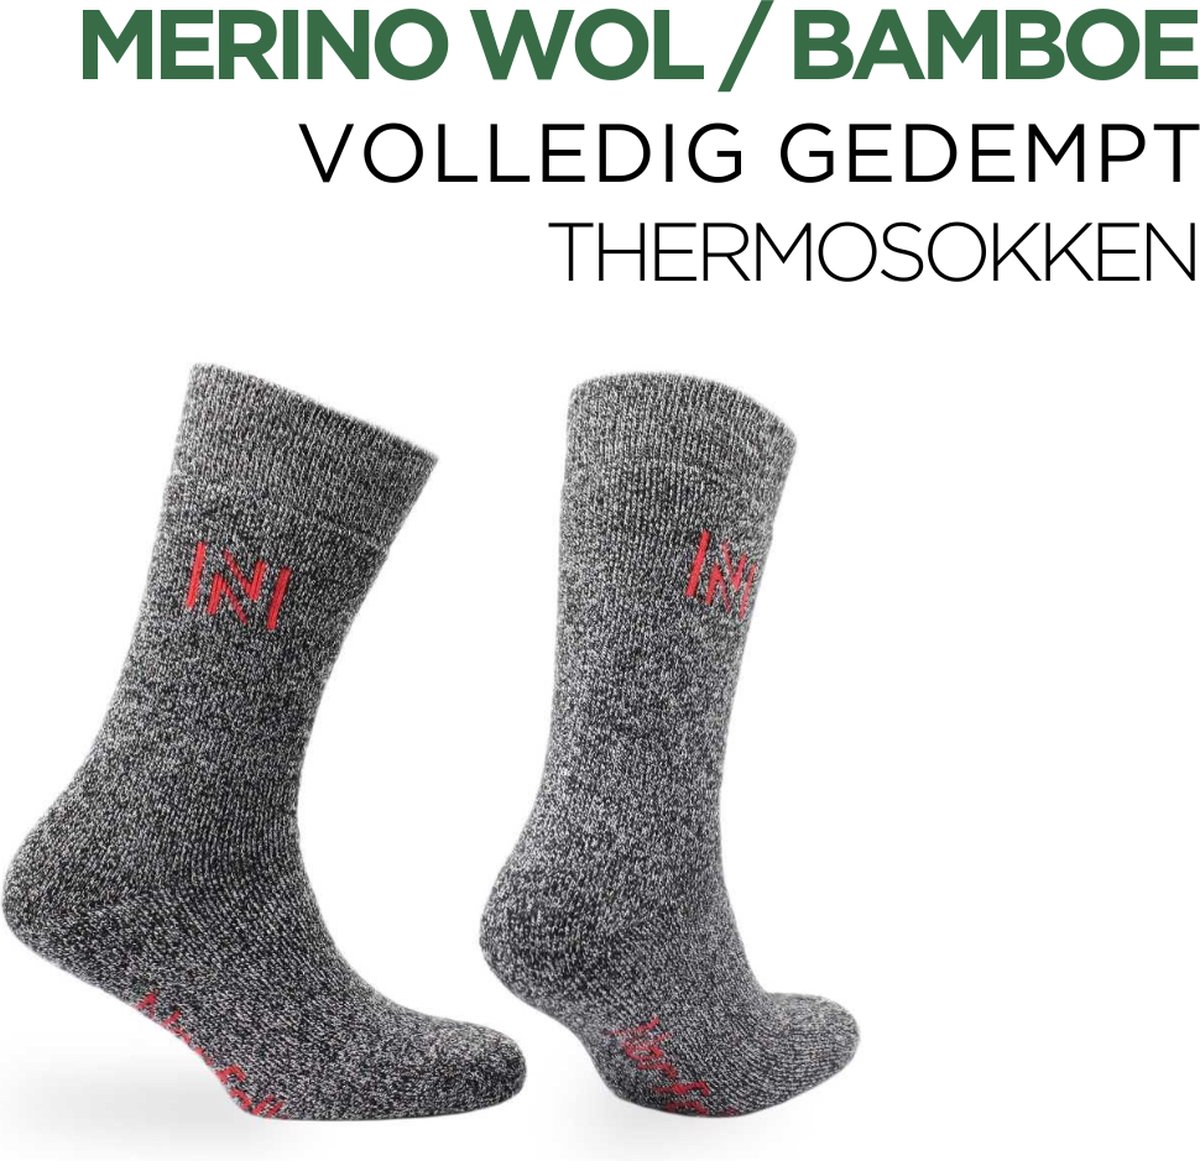 Norfolk - Wandelsokken - Merino wol en Bamboe Mix - Thermische Zacht en Warme Outdoorsokken - Merino wol sokken - Sokken Heren - Wollen Sokken - Zwart - 43-46 - Gabby